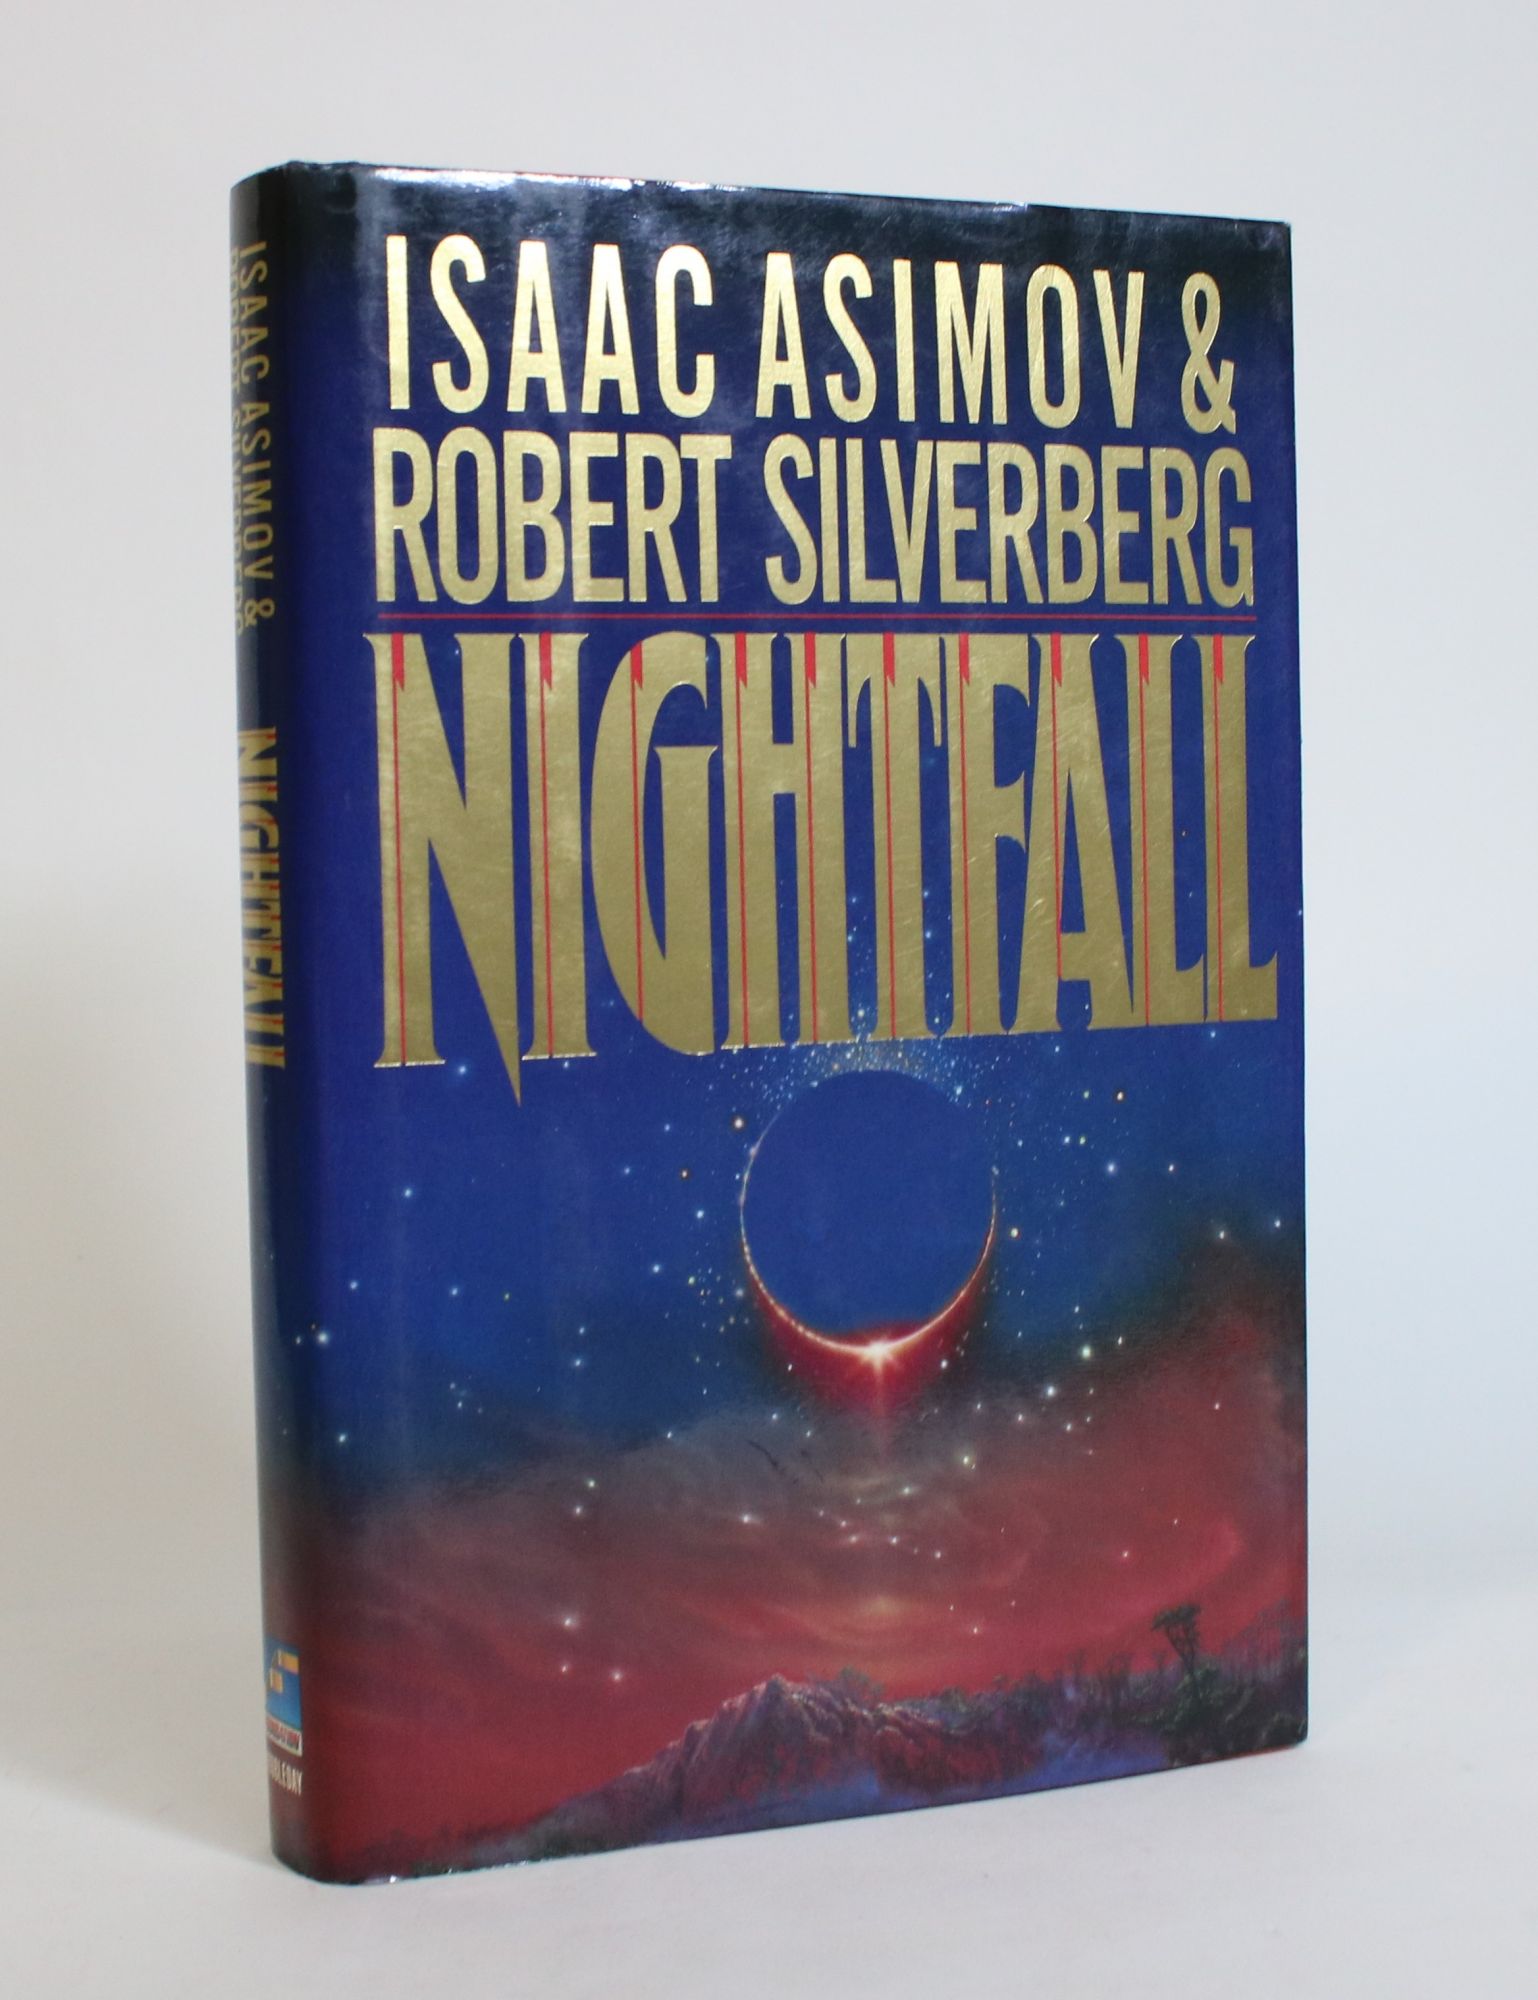 Nightfall - Asimov, Isaac and Robert Silverberg